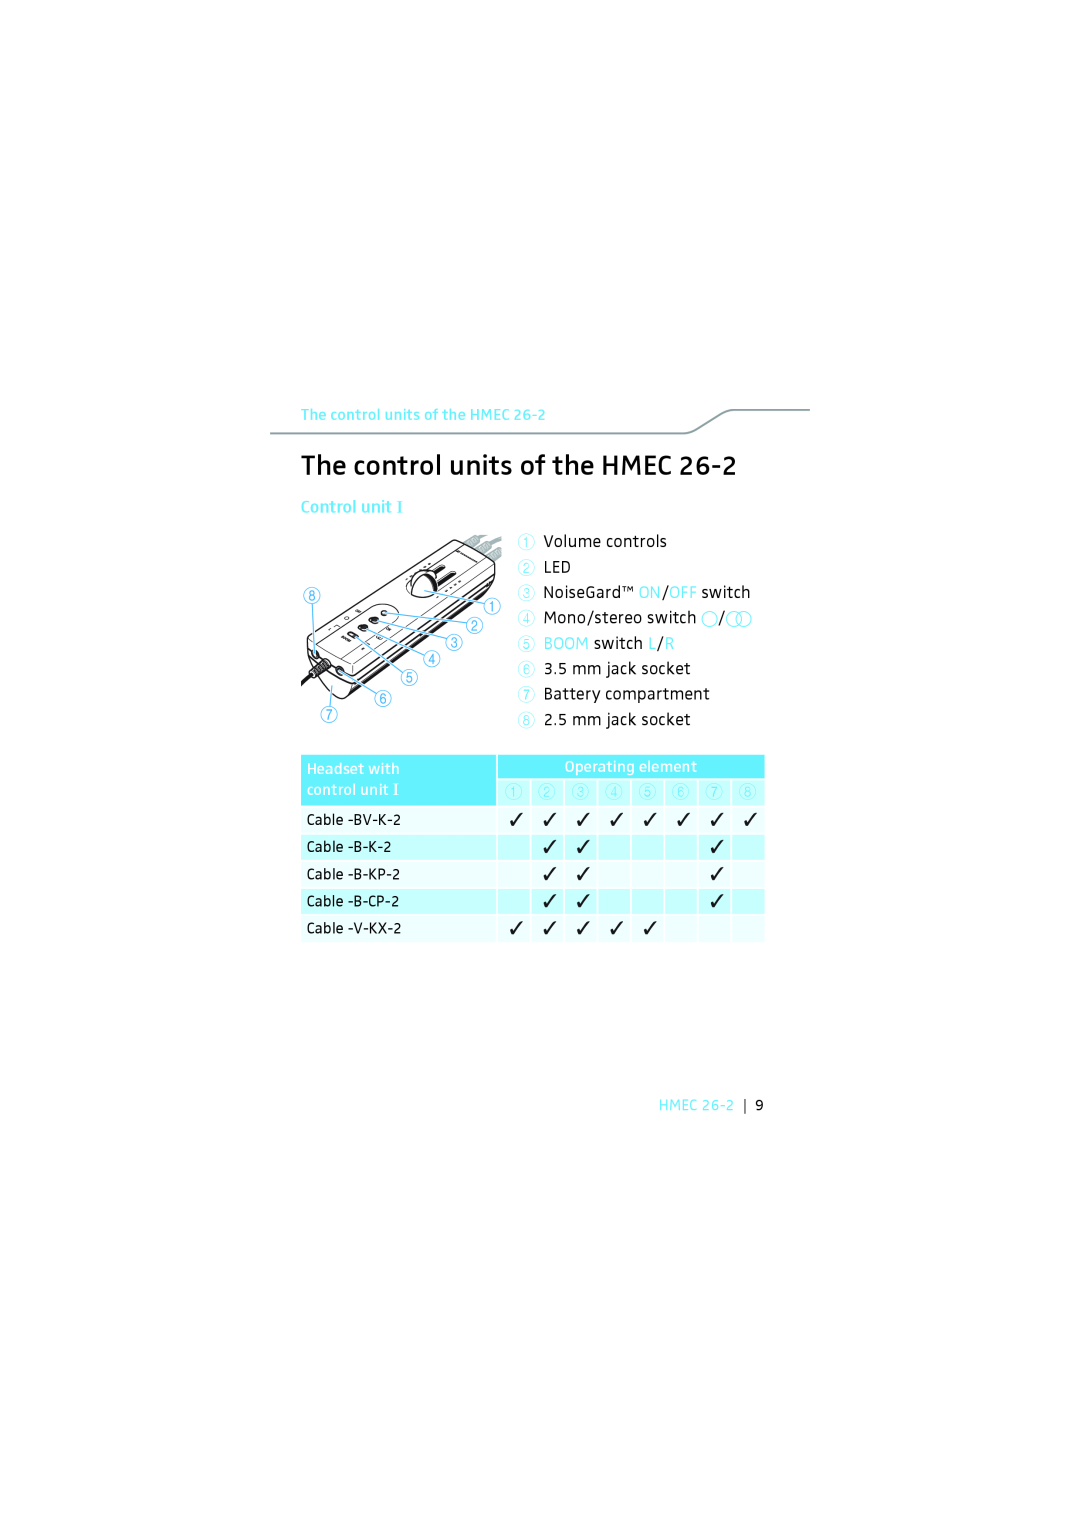 Sennheiser HMEC 26-2 The control units of the HMEC, Control unit, BOOM switch L /R, 1 2 3 4 5 6, NoiseGard ON/ OFF switch 